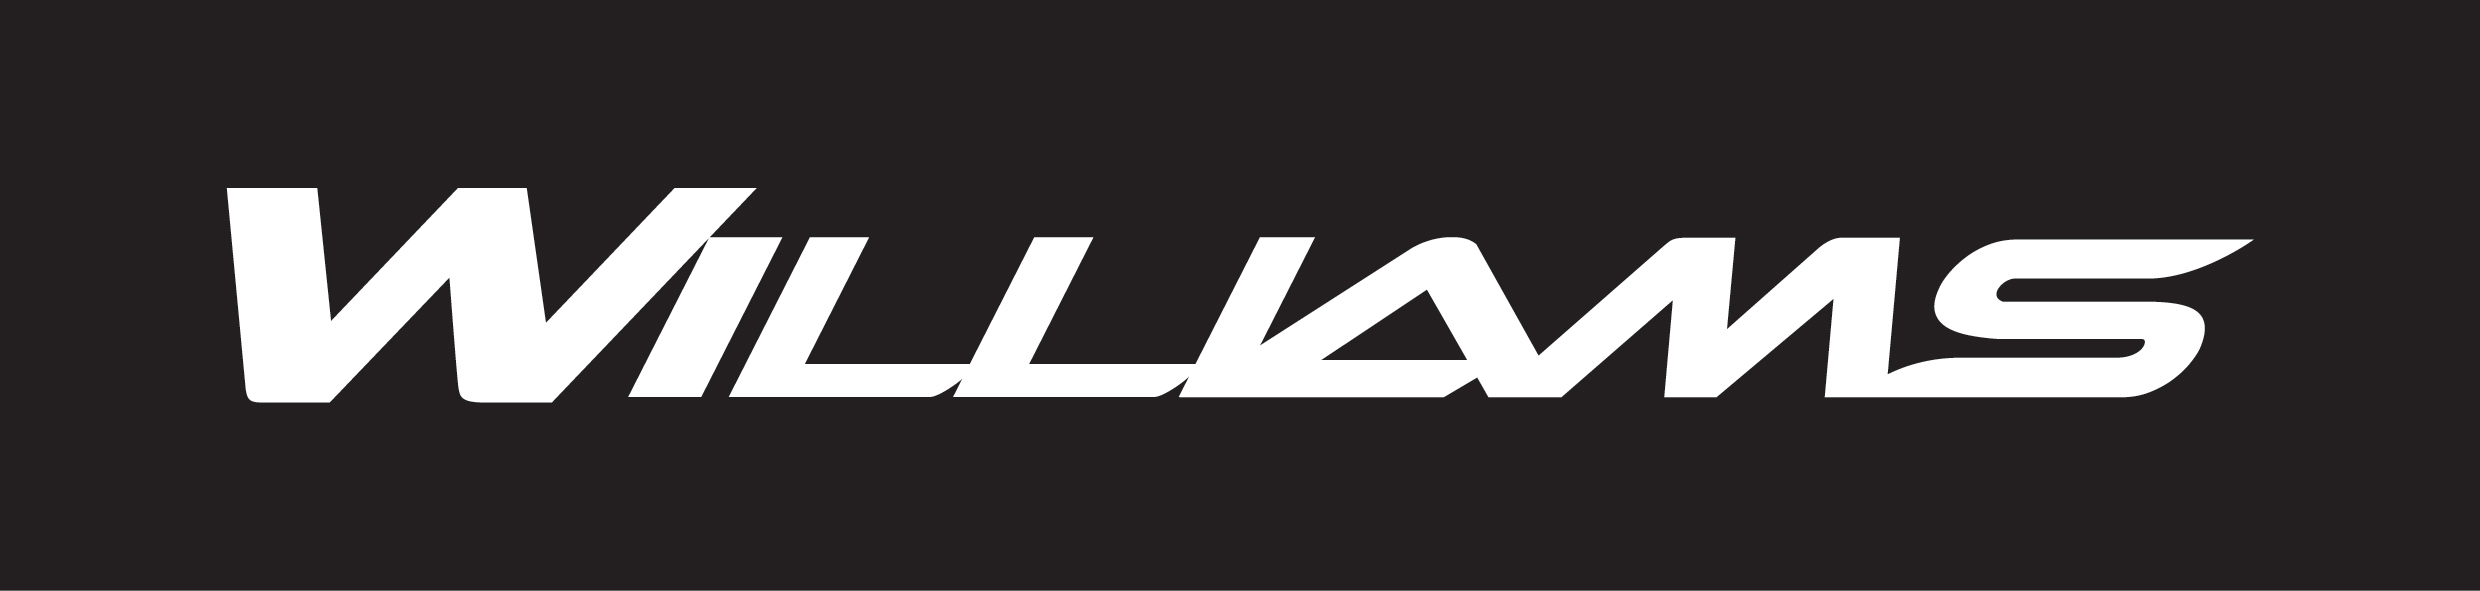 Williams Logo - Support